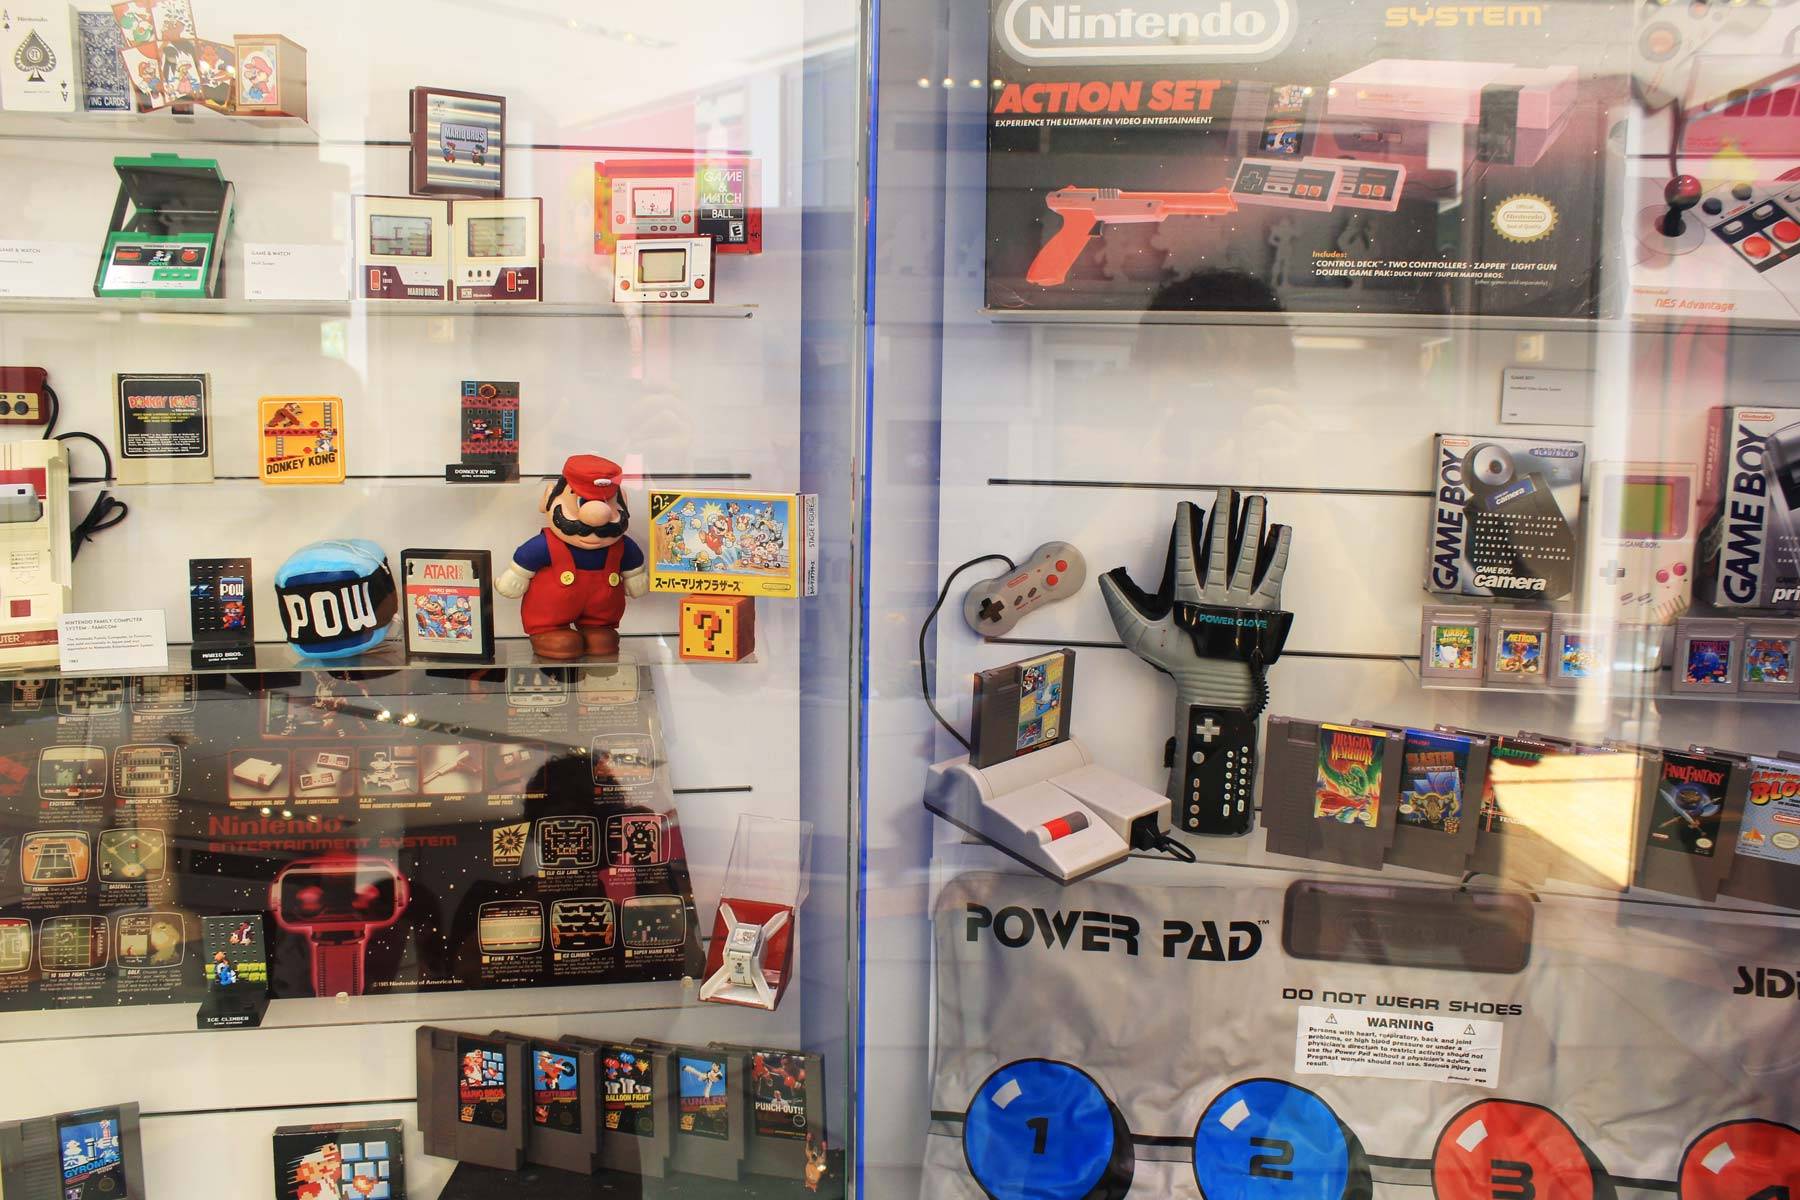 Nintendo accessories and merchandise